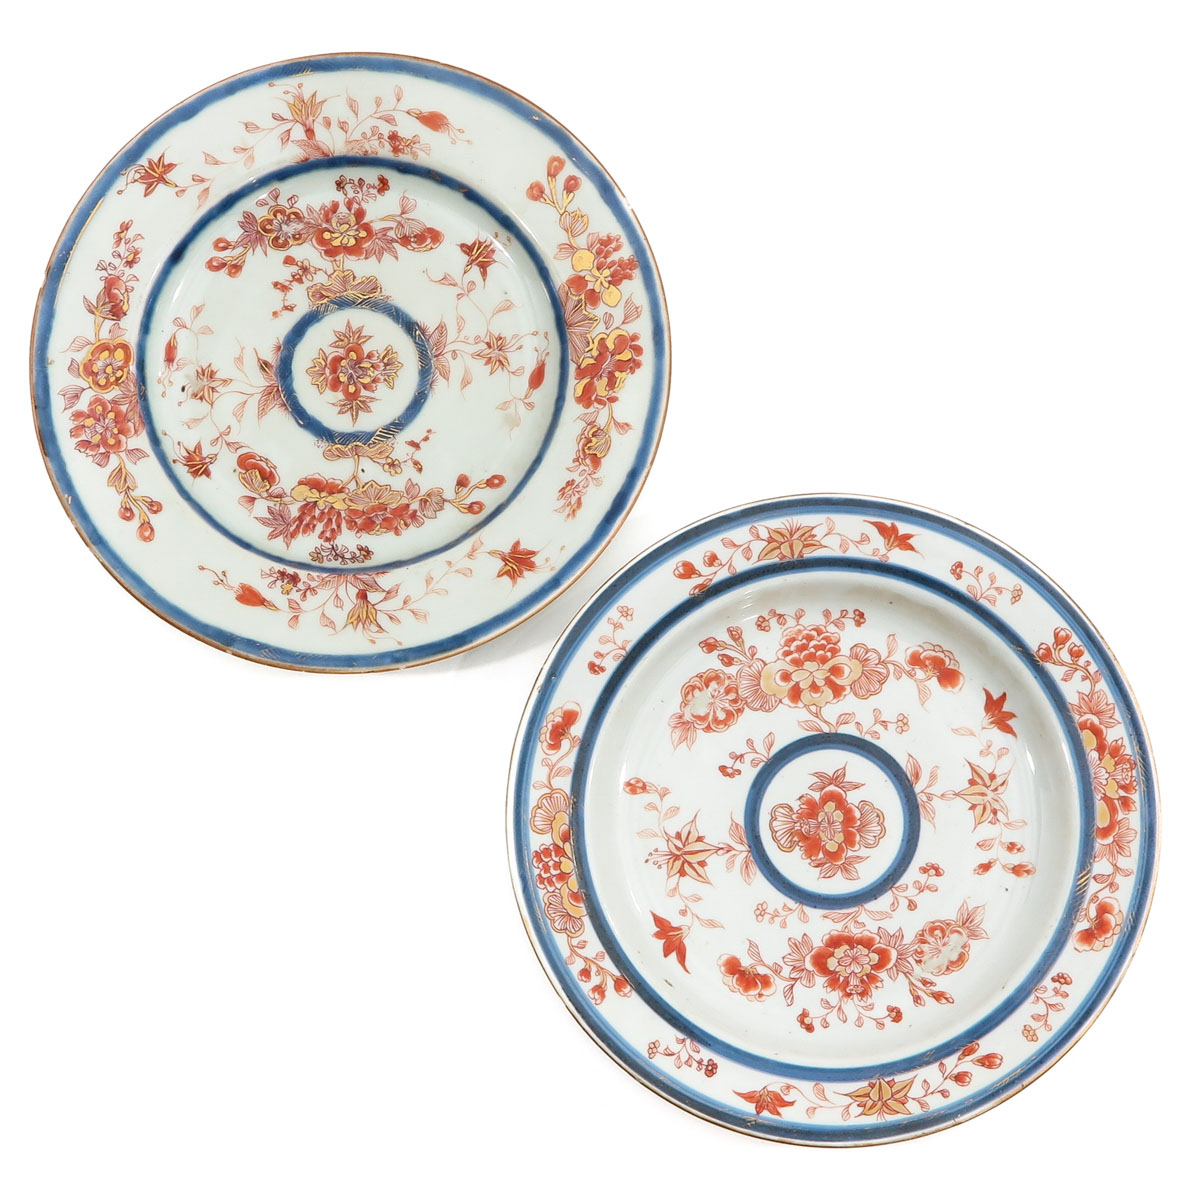 A Series of 6 Imari Plates - Image 5 of 10